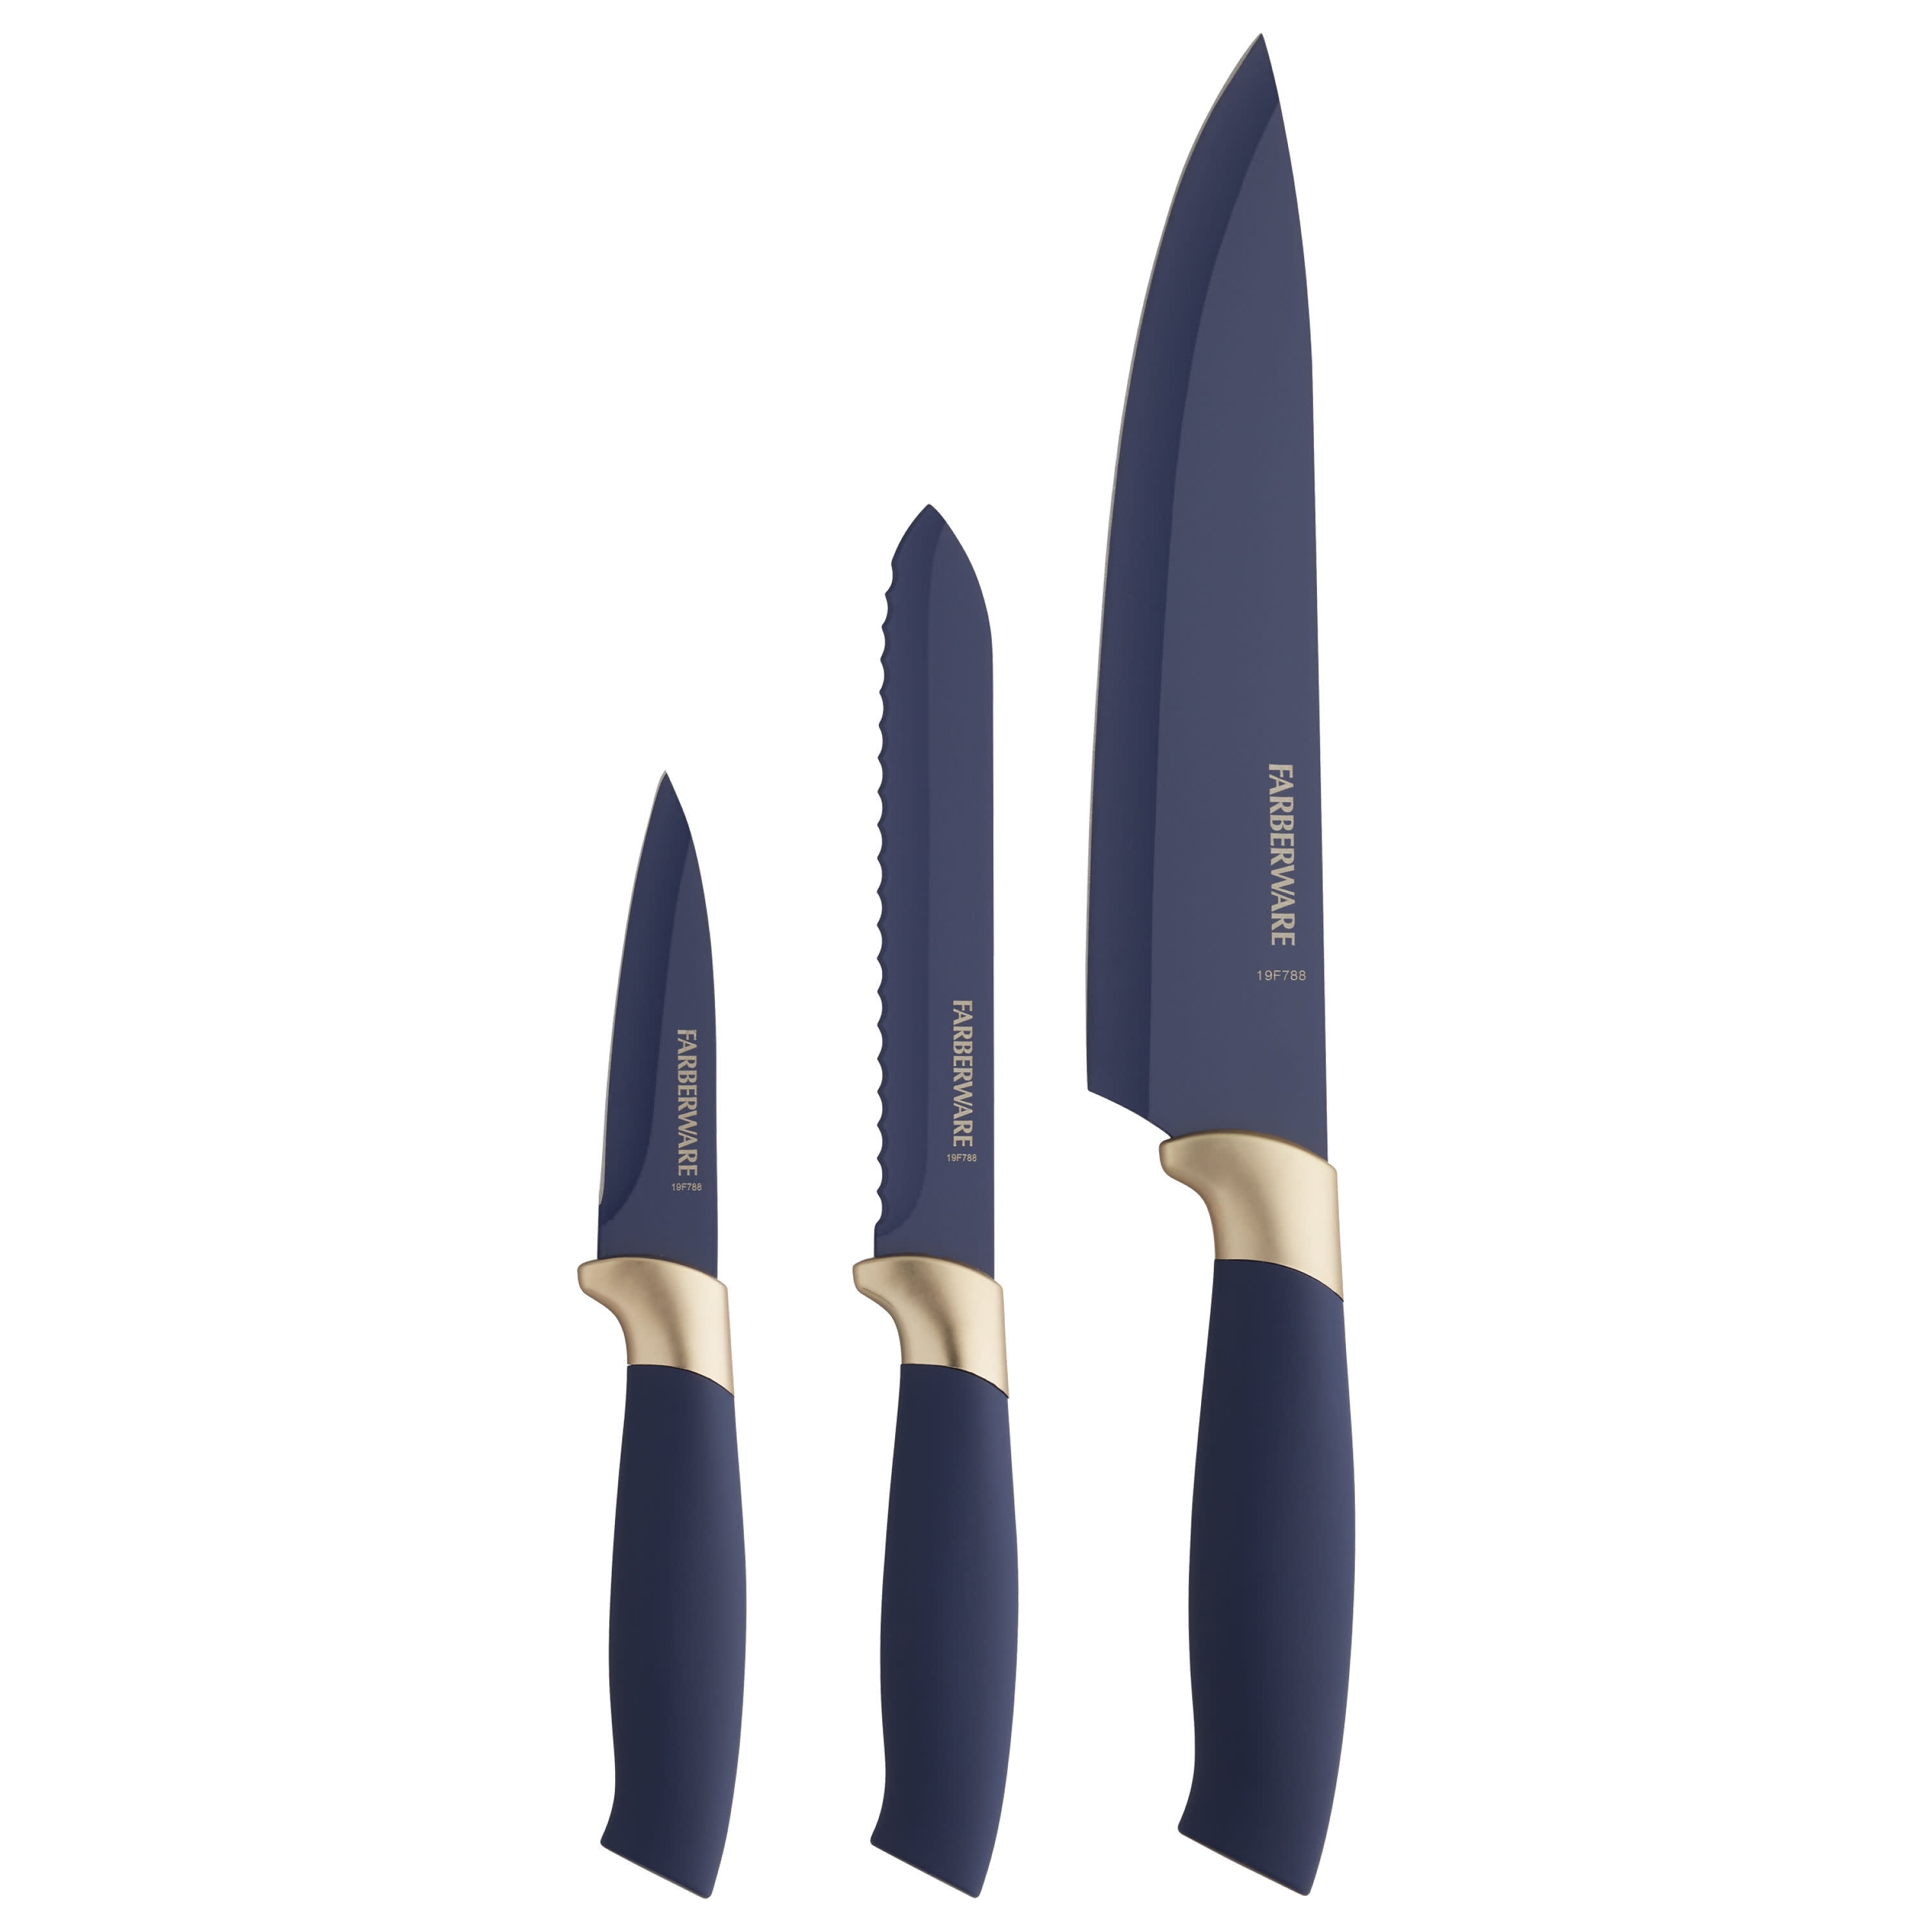 Farberware Ceramic 3.5 Metallic Gold Paring Knife with Blade